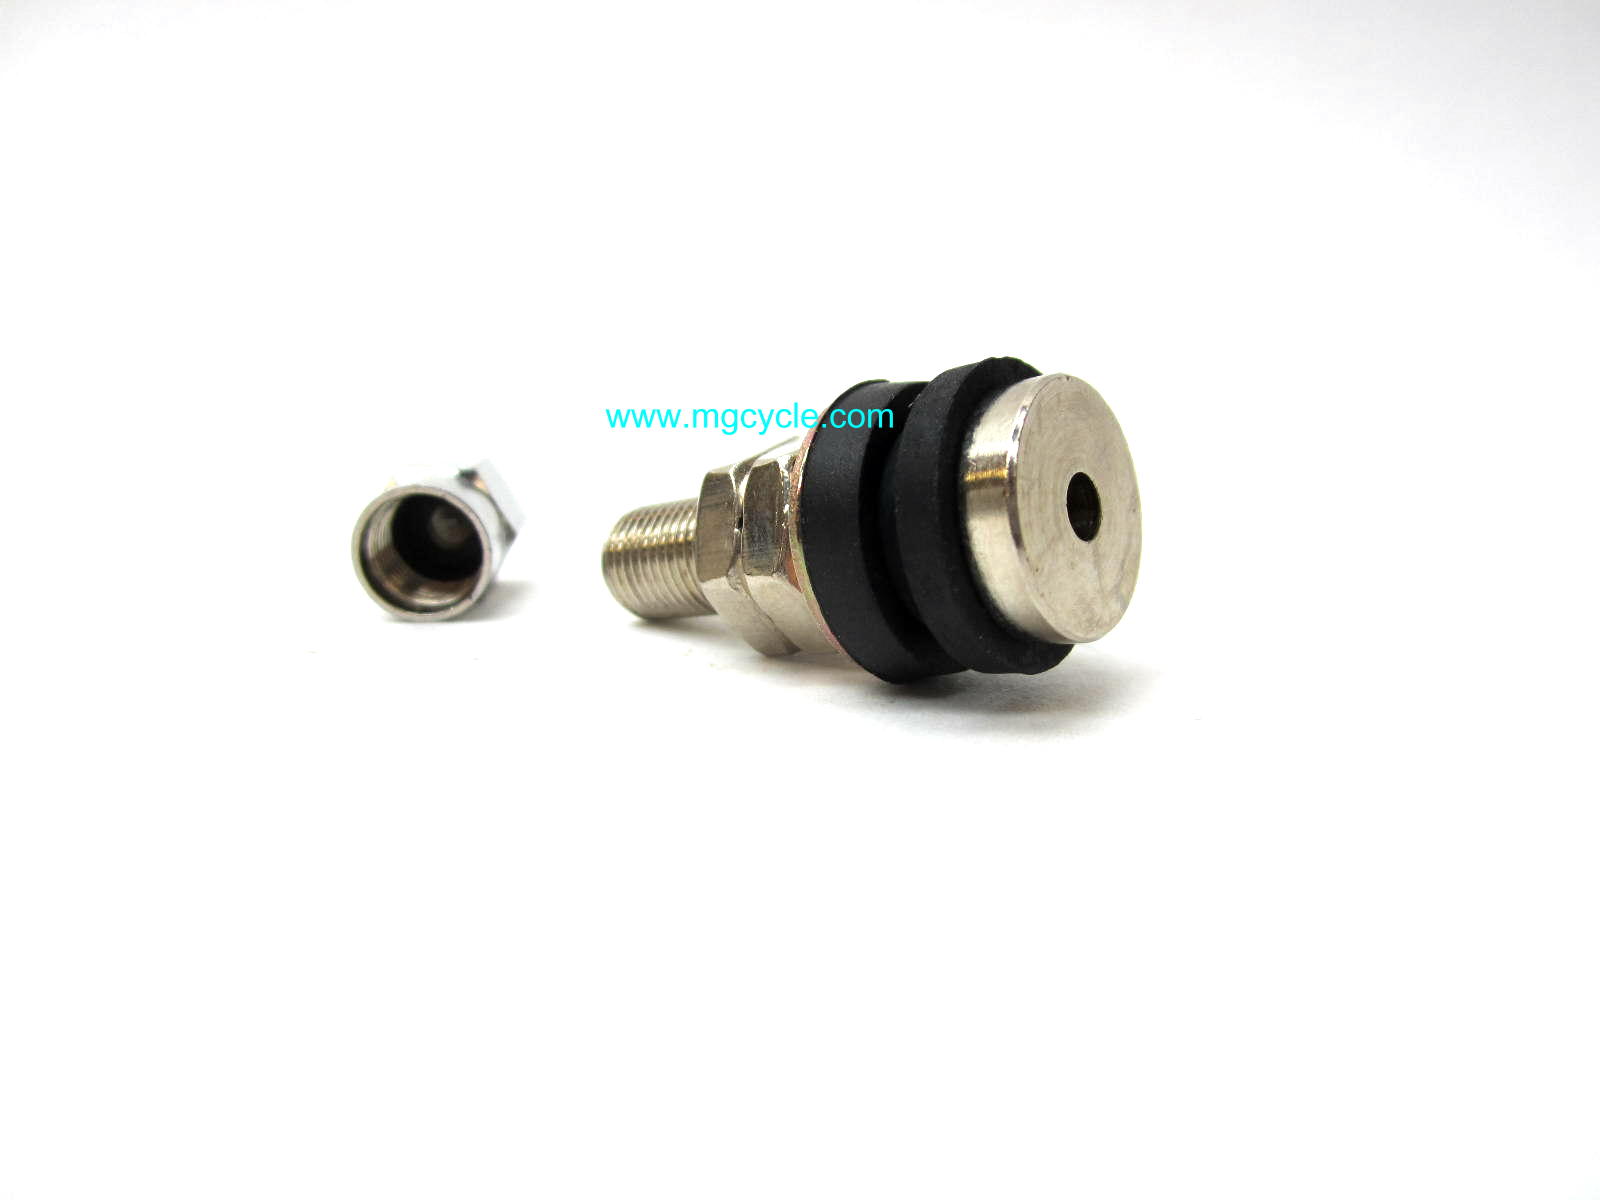 Parts Unlimited generic valve stem - Click Image to Close